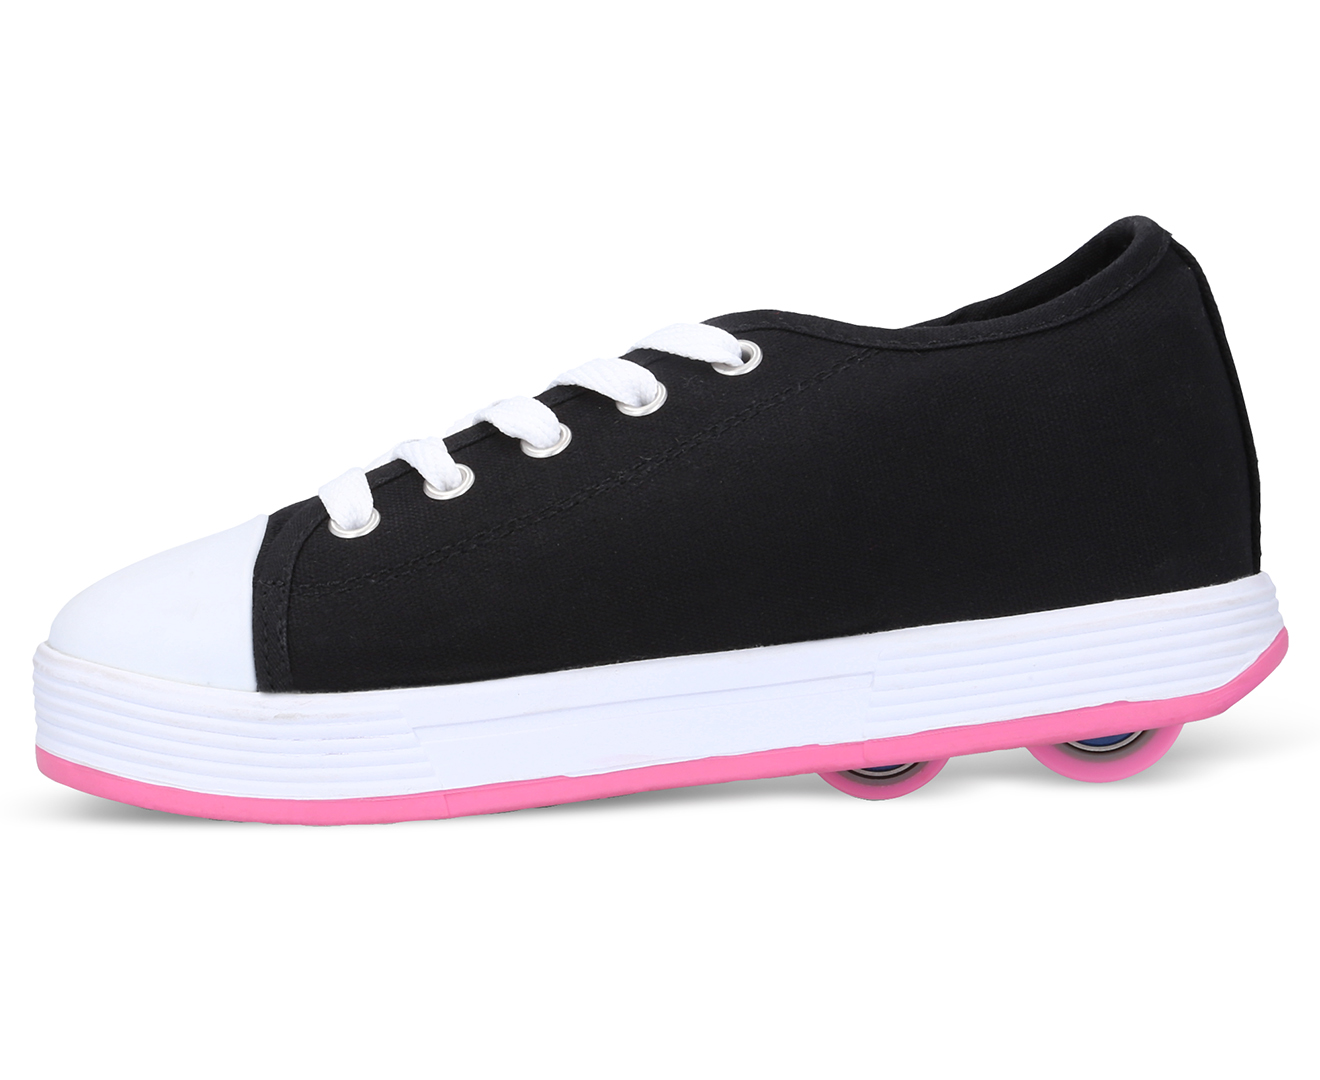 Heelys Girls' Skate Shoes - Black/Pink |